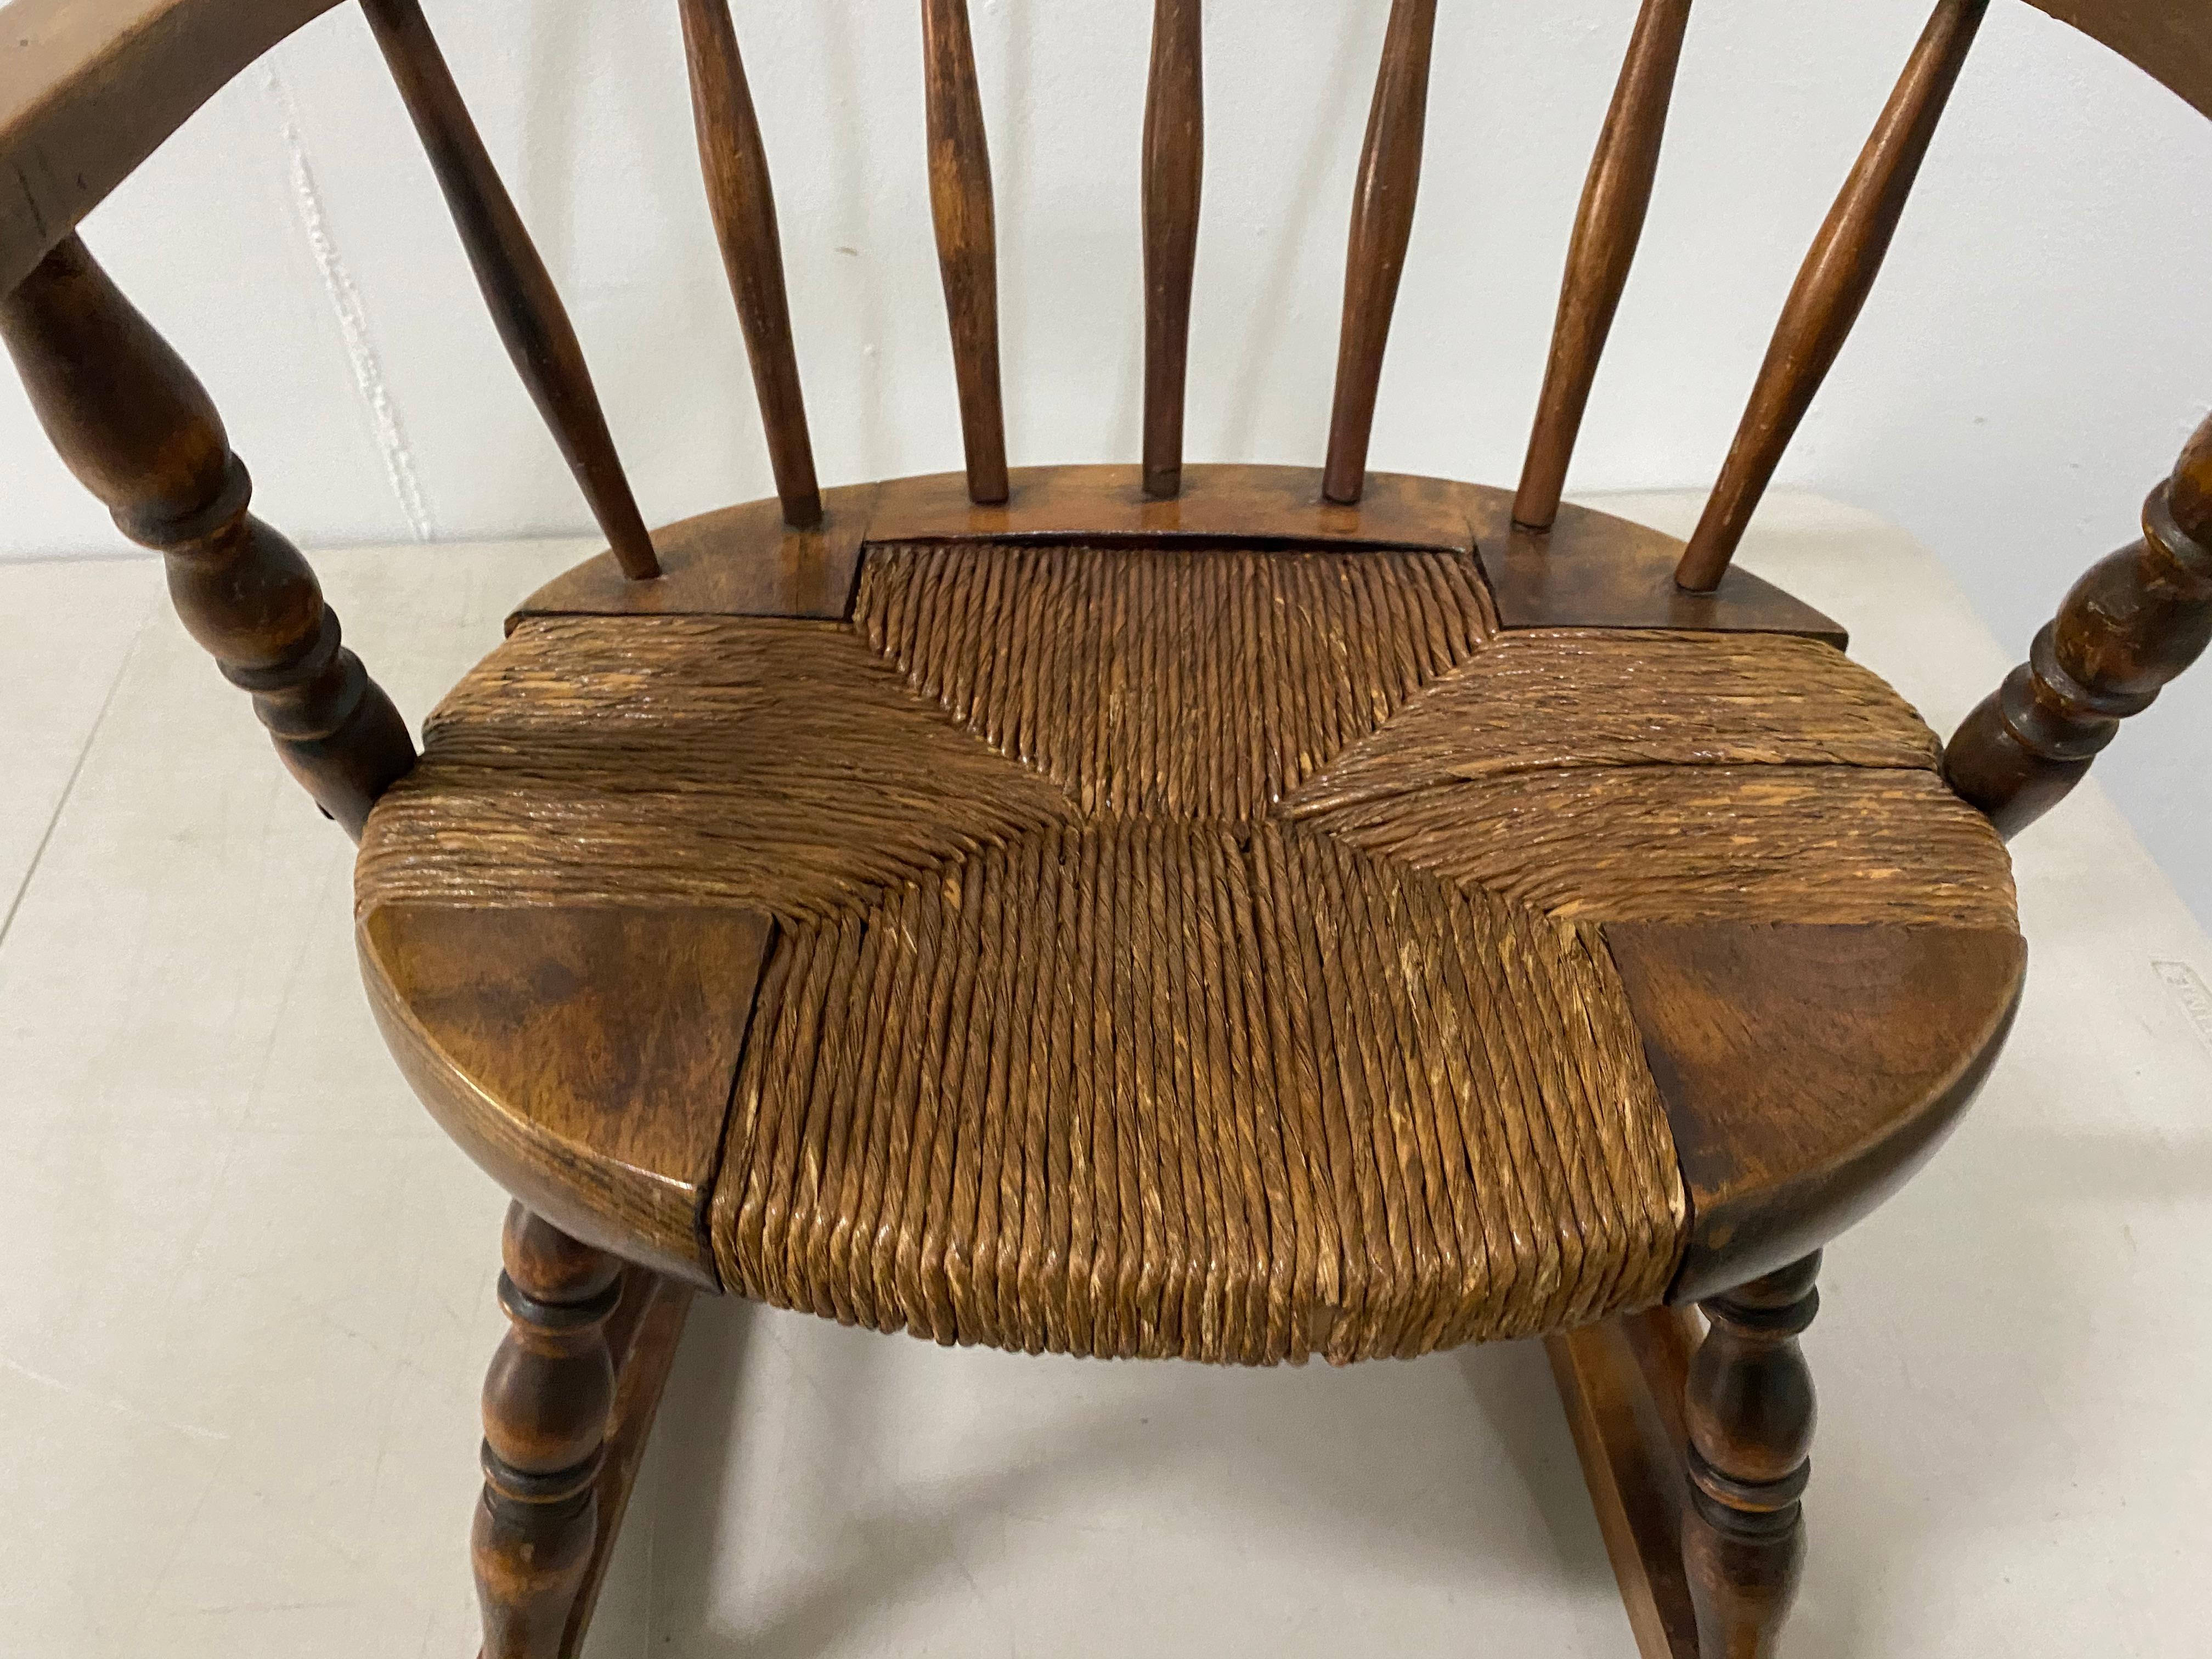 19th century rocking chair